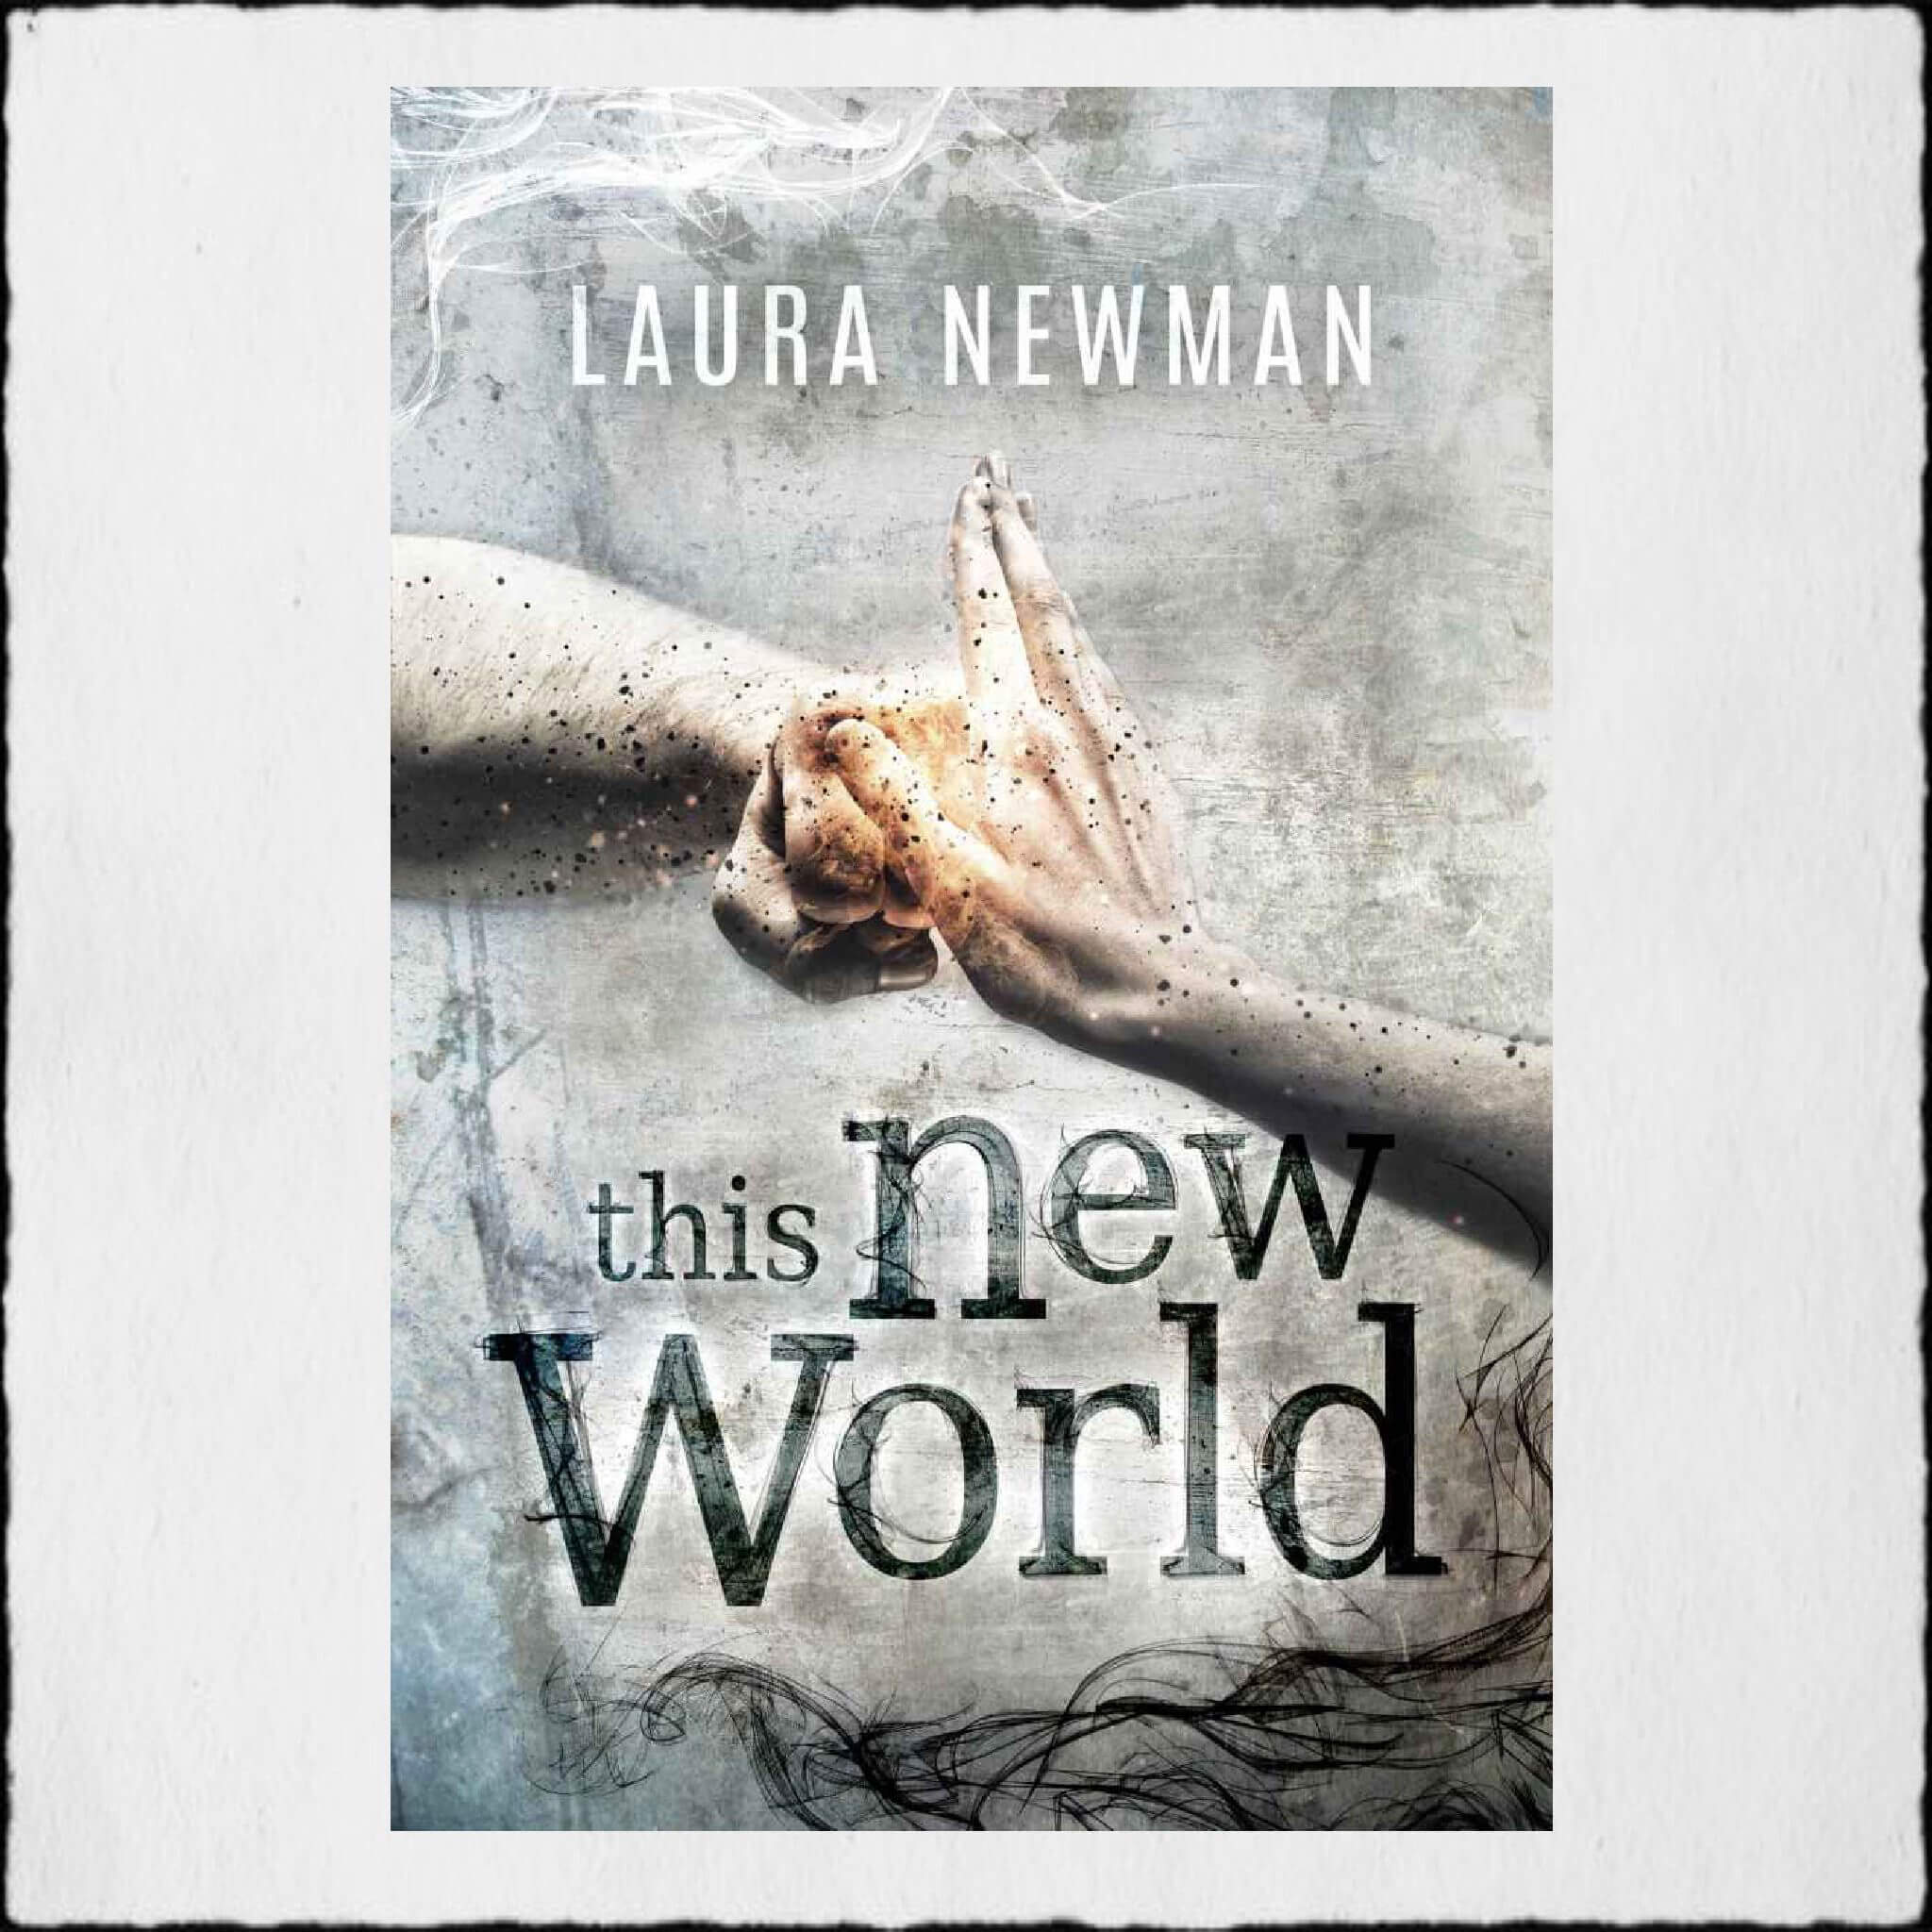 Jahresrückblick: Laura Newman - "This New World" - Copyright © 2017 Laura Newman